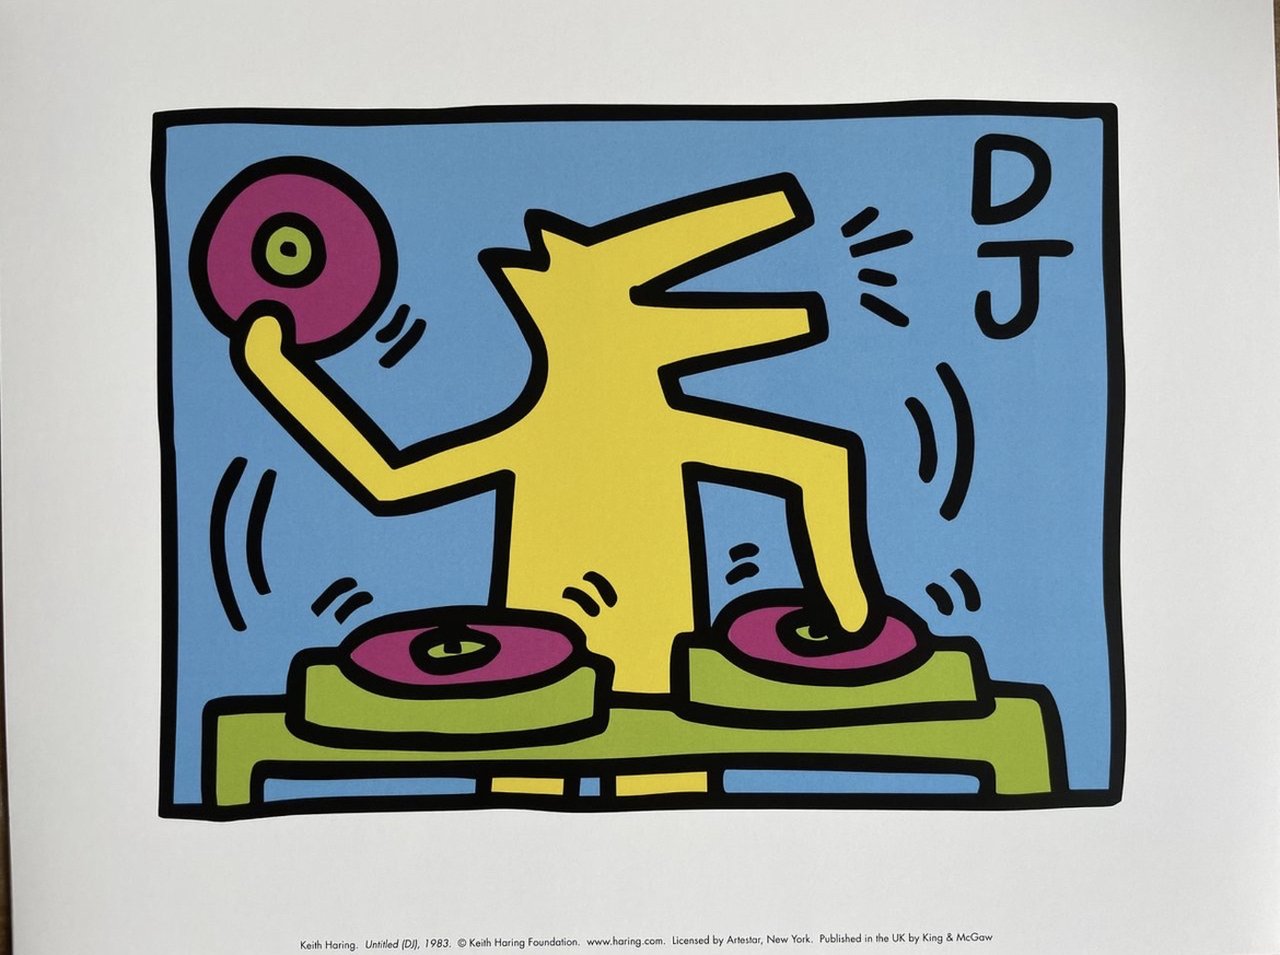 Image 4 of Keith Haring (naar) - Untitled (DJ), 1983, onder licentie van Artestar NY, gedrukt in het VK